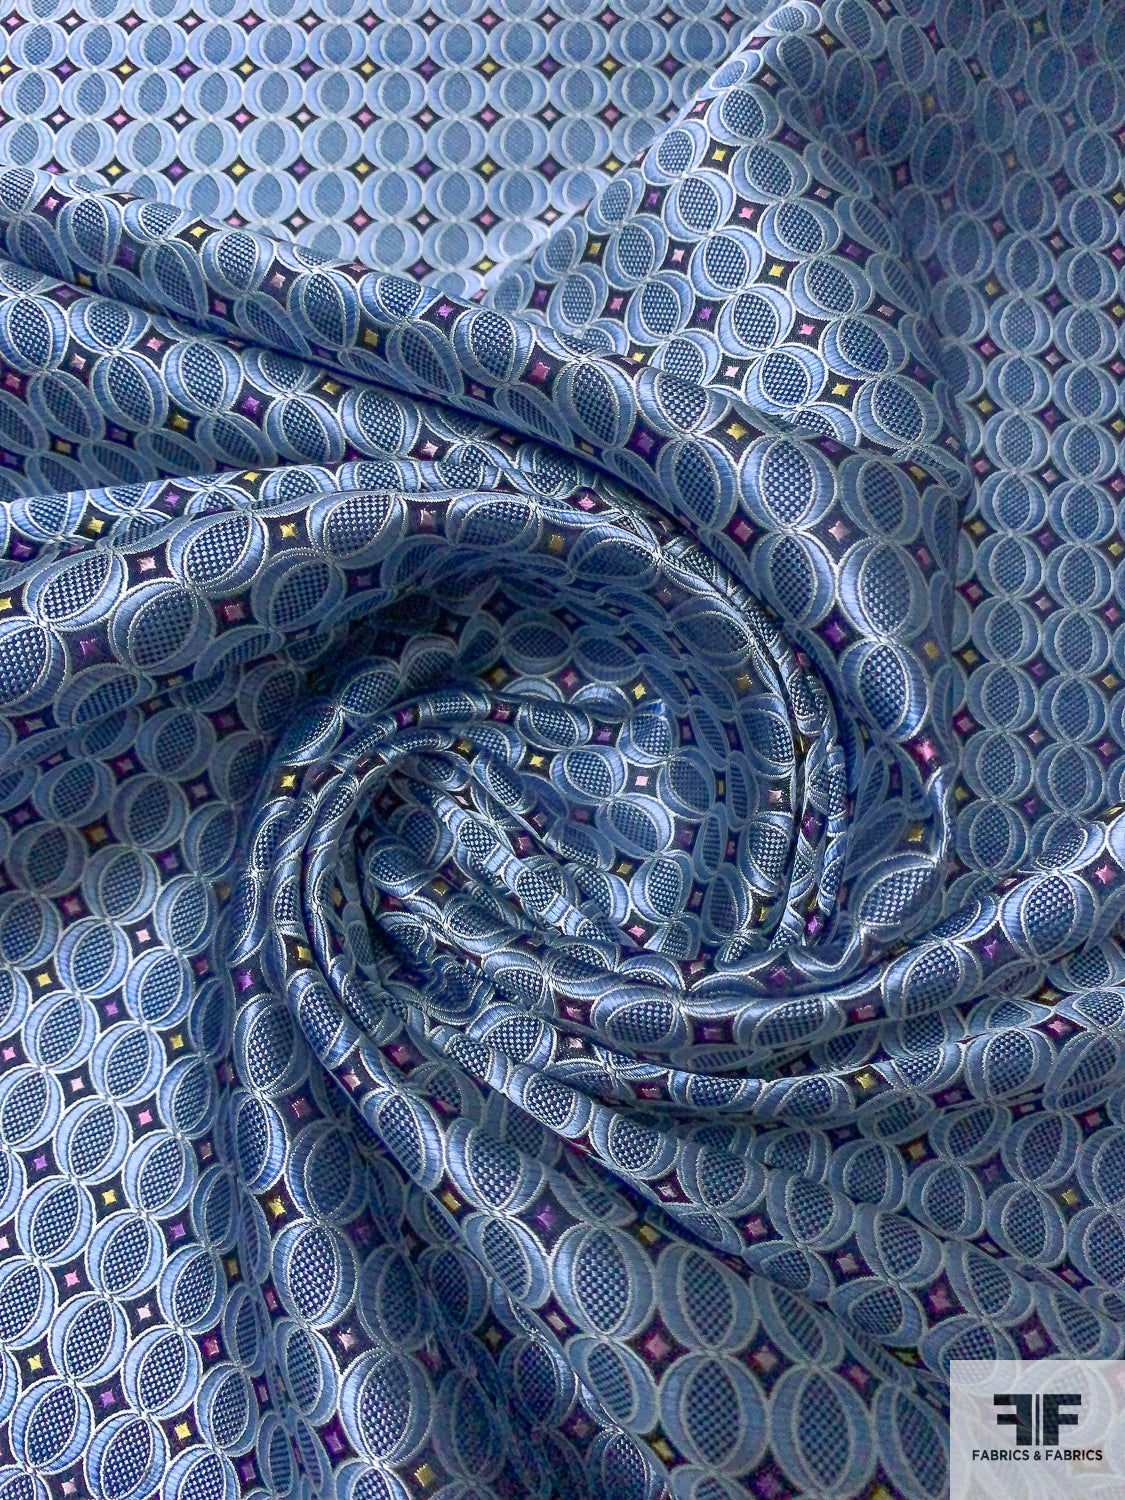 Oval Disc Silk Necktie Jacquard Brocade - Navy / Light Blue / Orchid Pinks